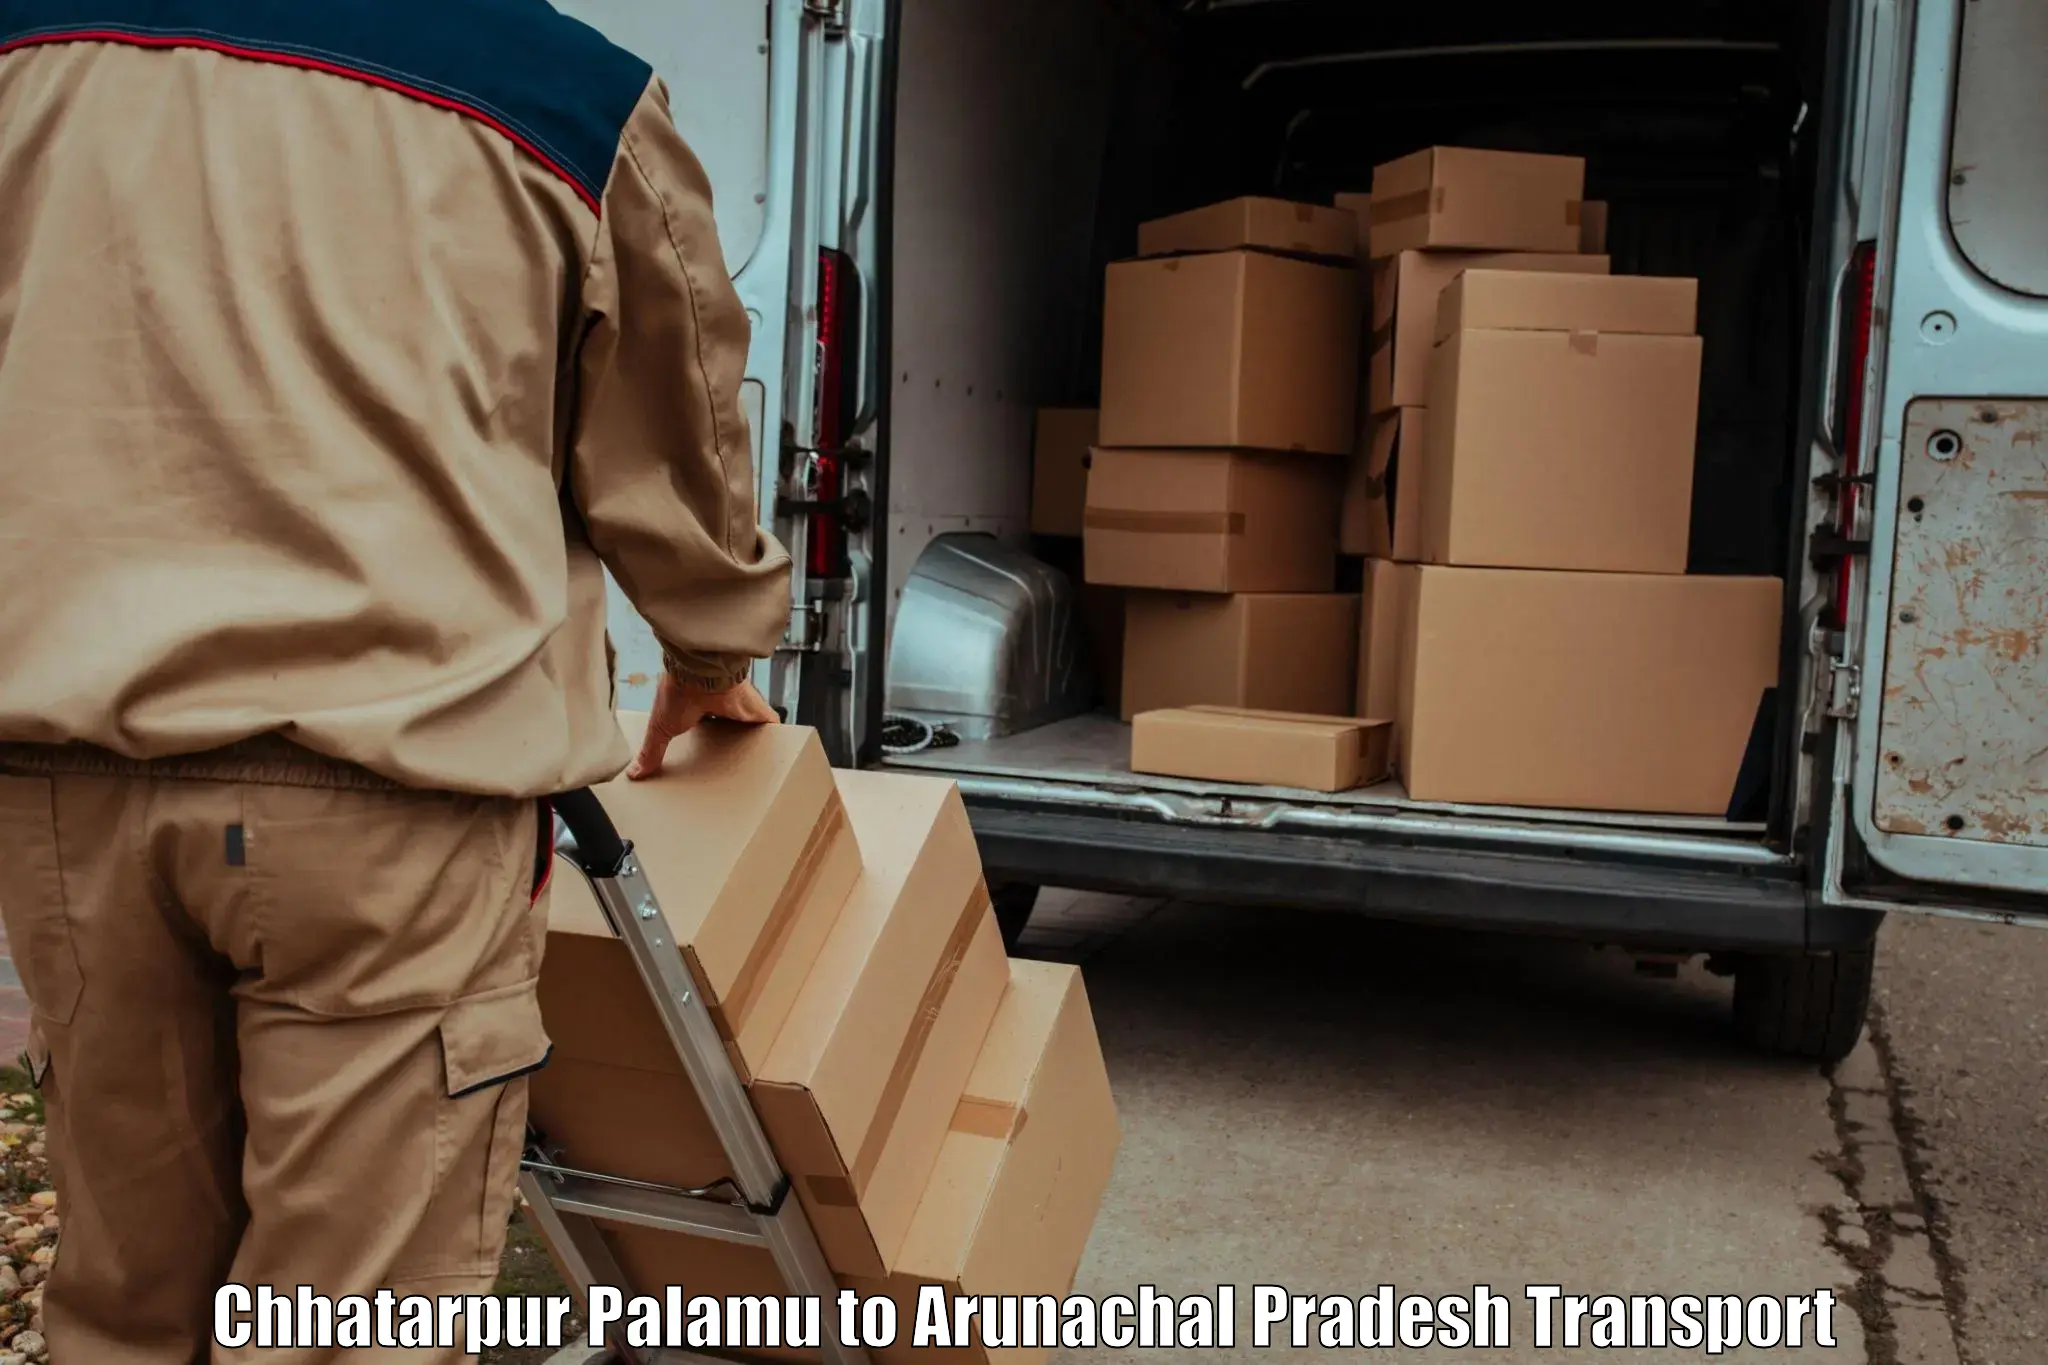 Furniture transport service Chhatarpur Palamu to Arunachal Pradesh